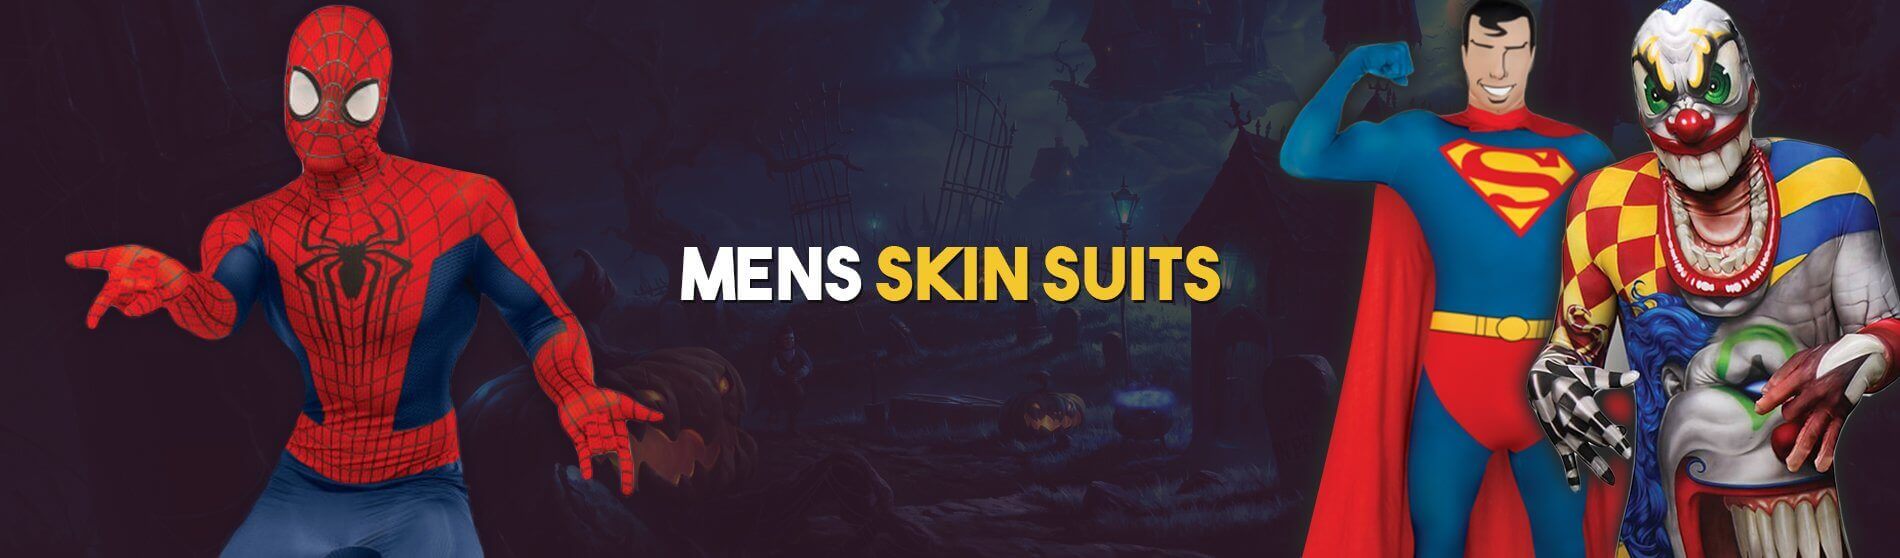 Glendale Halloween : mens-skin-suits